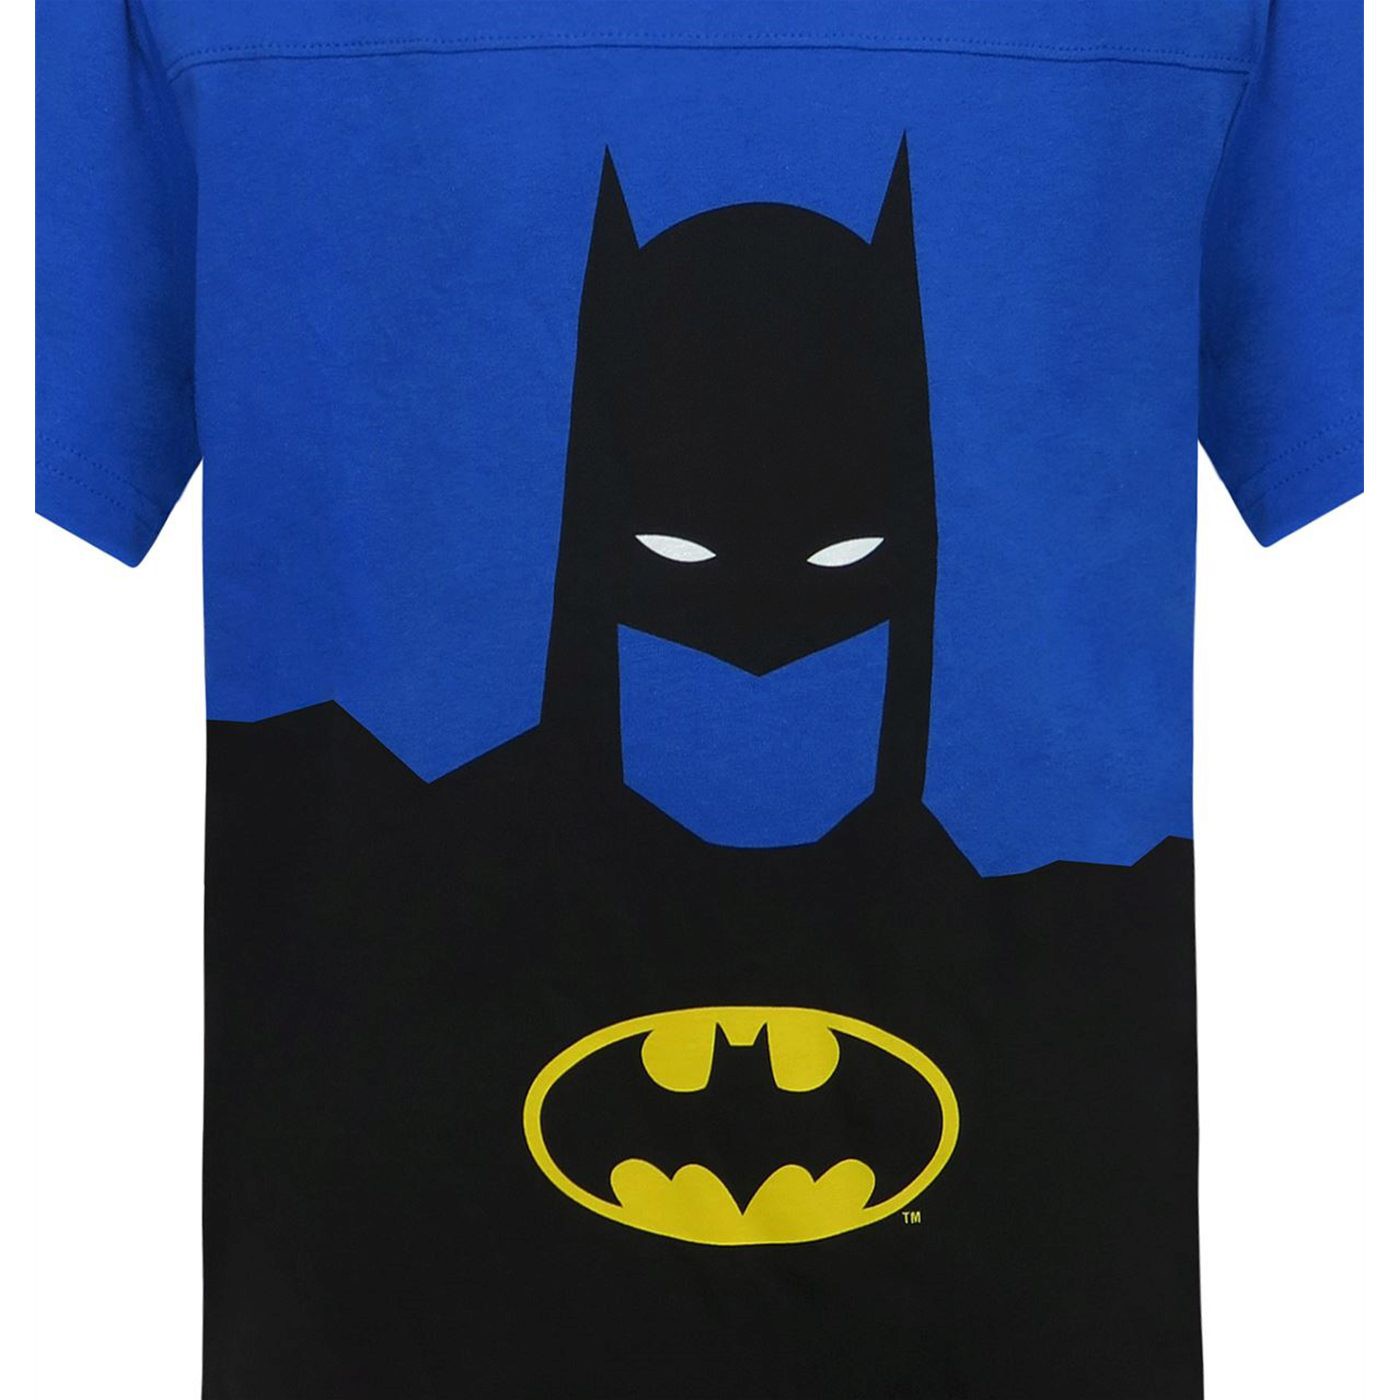 Batman Silhouette Kids T-Shirt